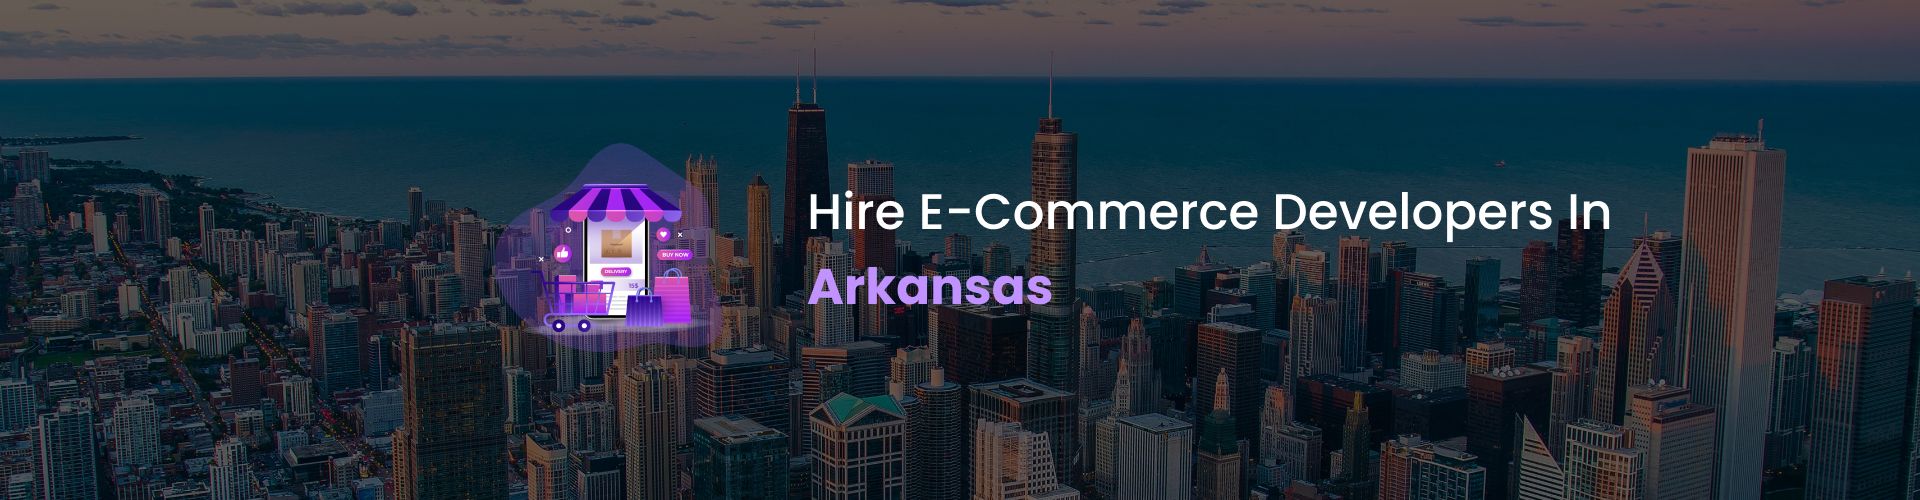 hire ecommerce developers in arkansas